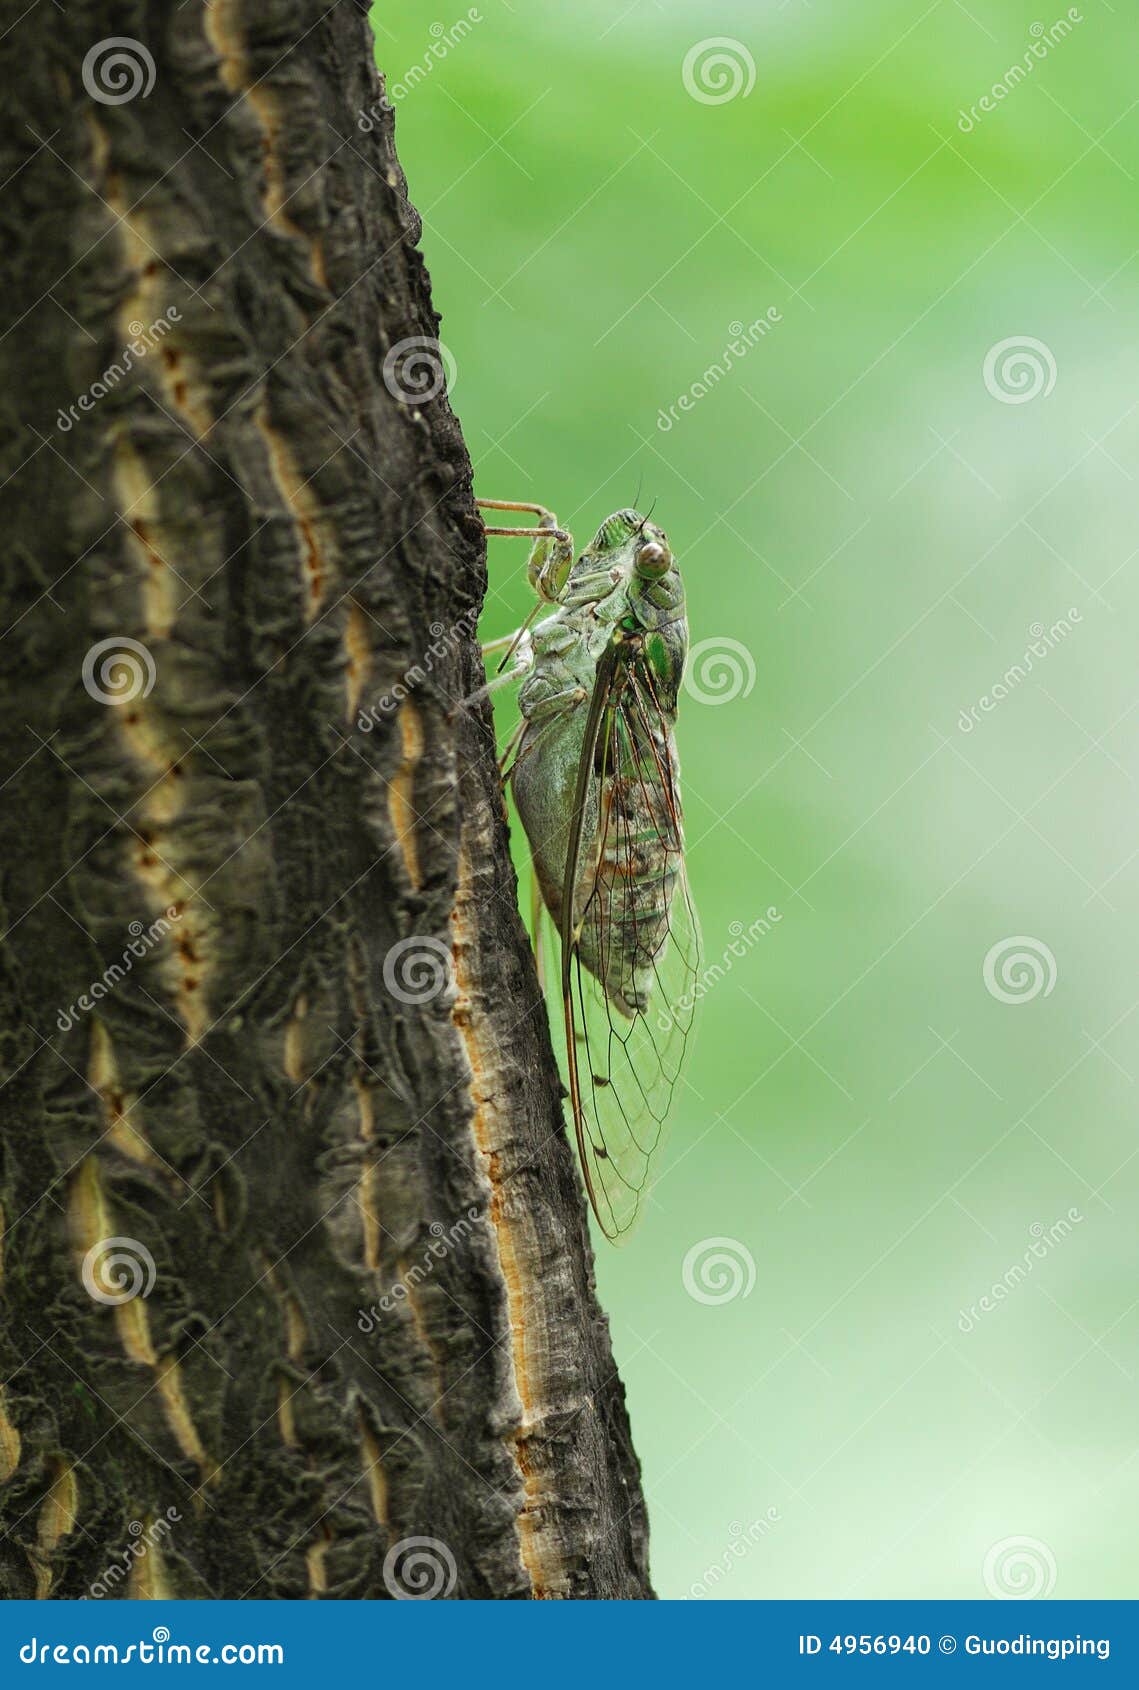 cicada on bole